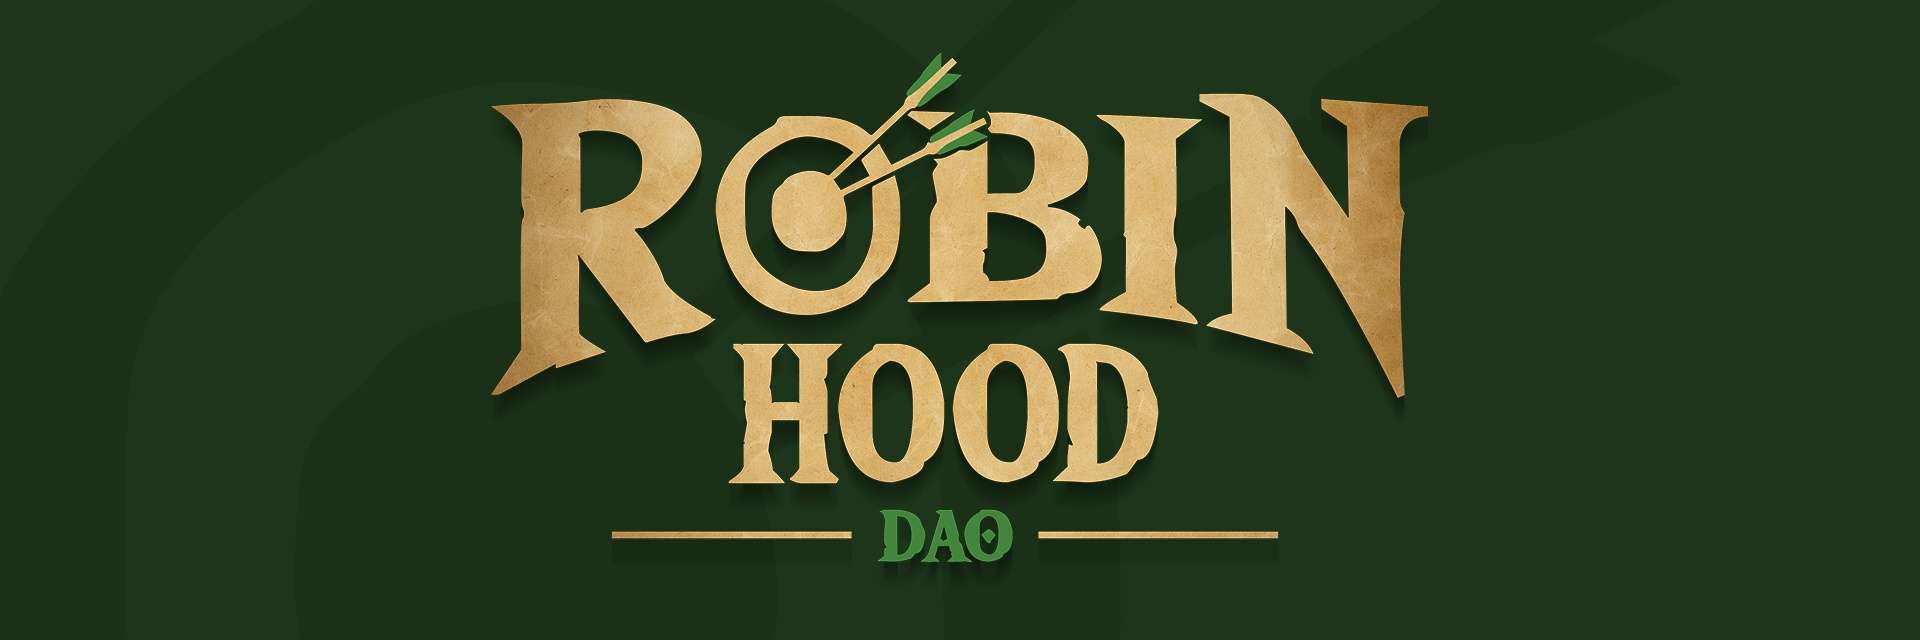 Robinhood Dao